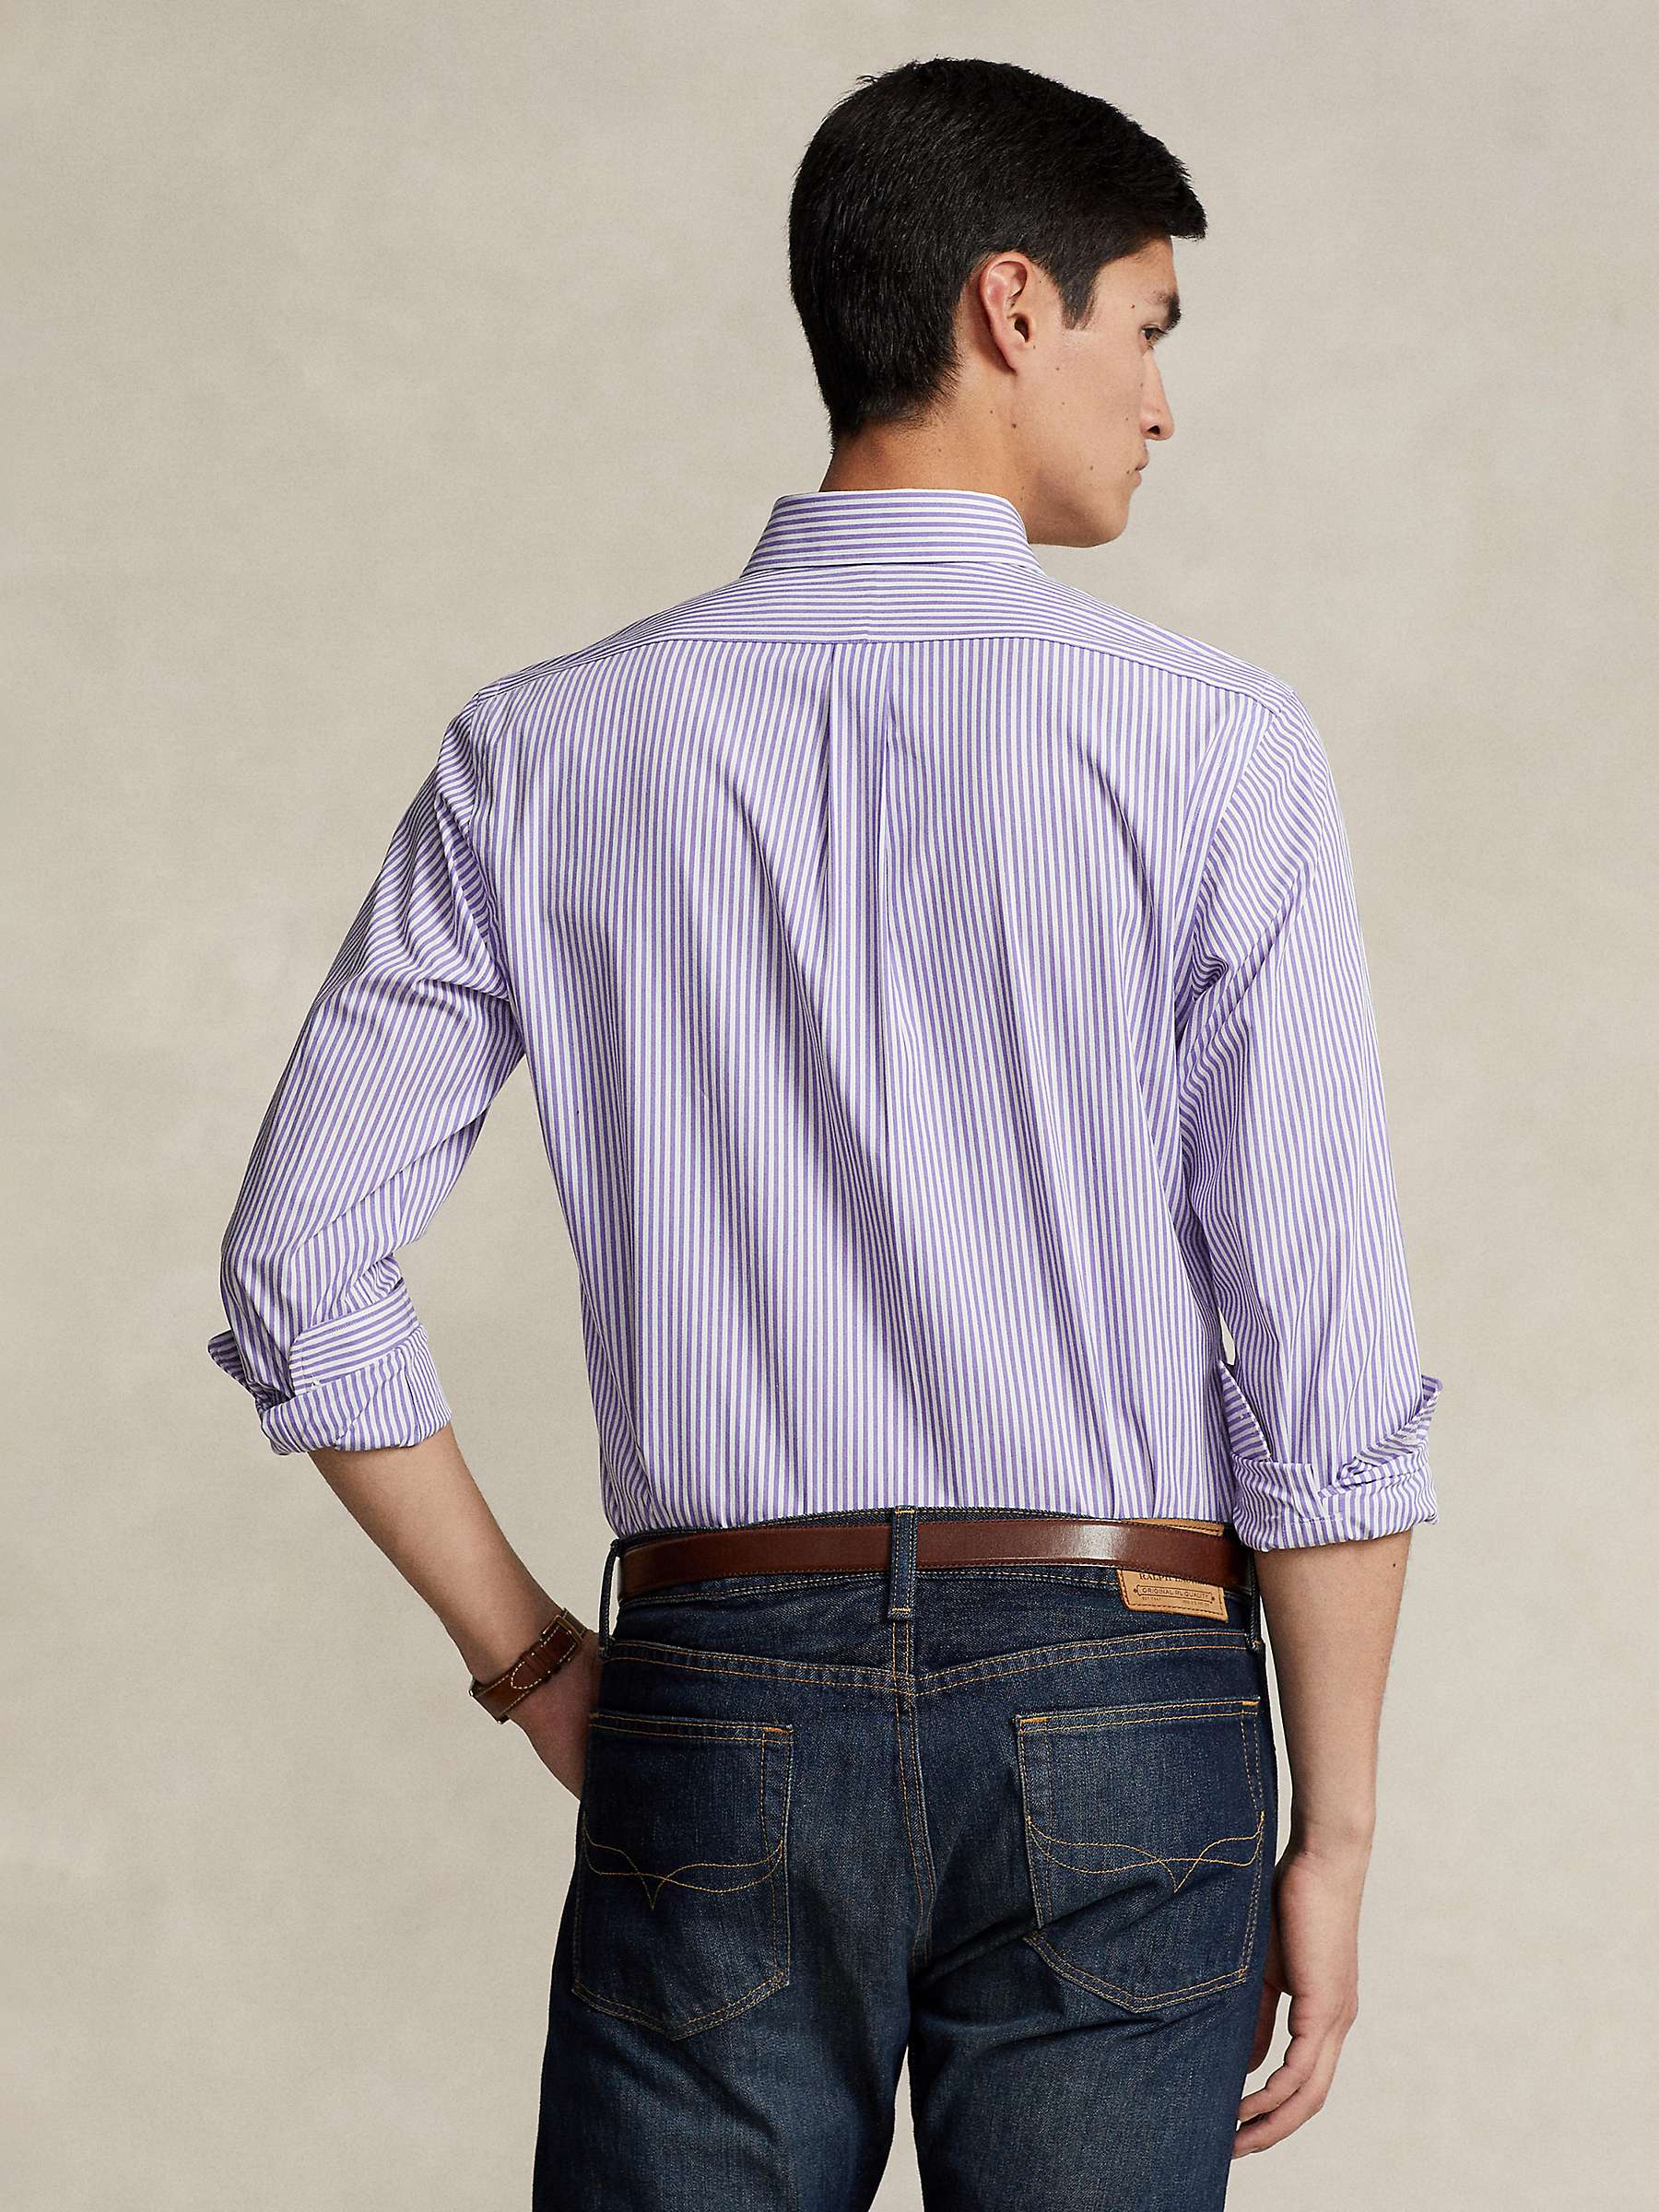 Buy Ralph Lauren Tailored Fit Plaid Stretch Poplin Stripe Shirt, Lavender/White Online at johnlewis.com